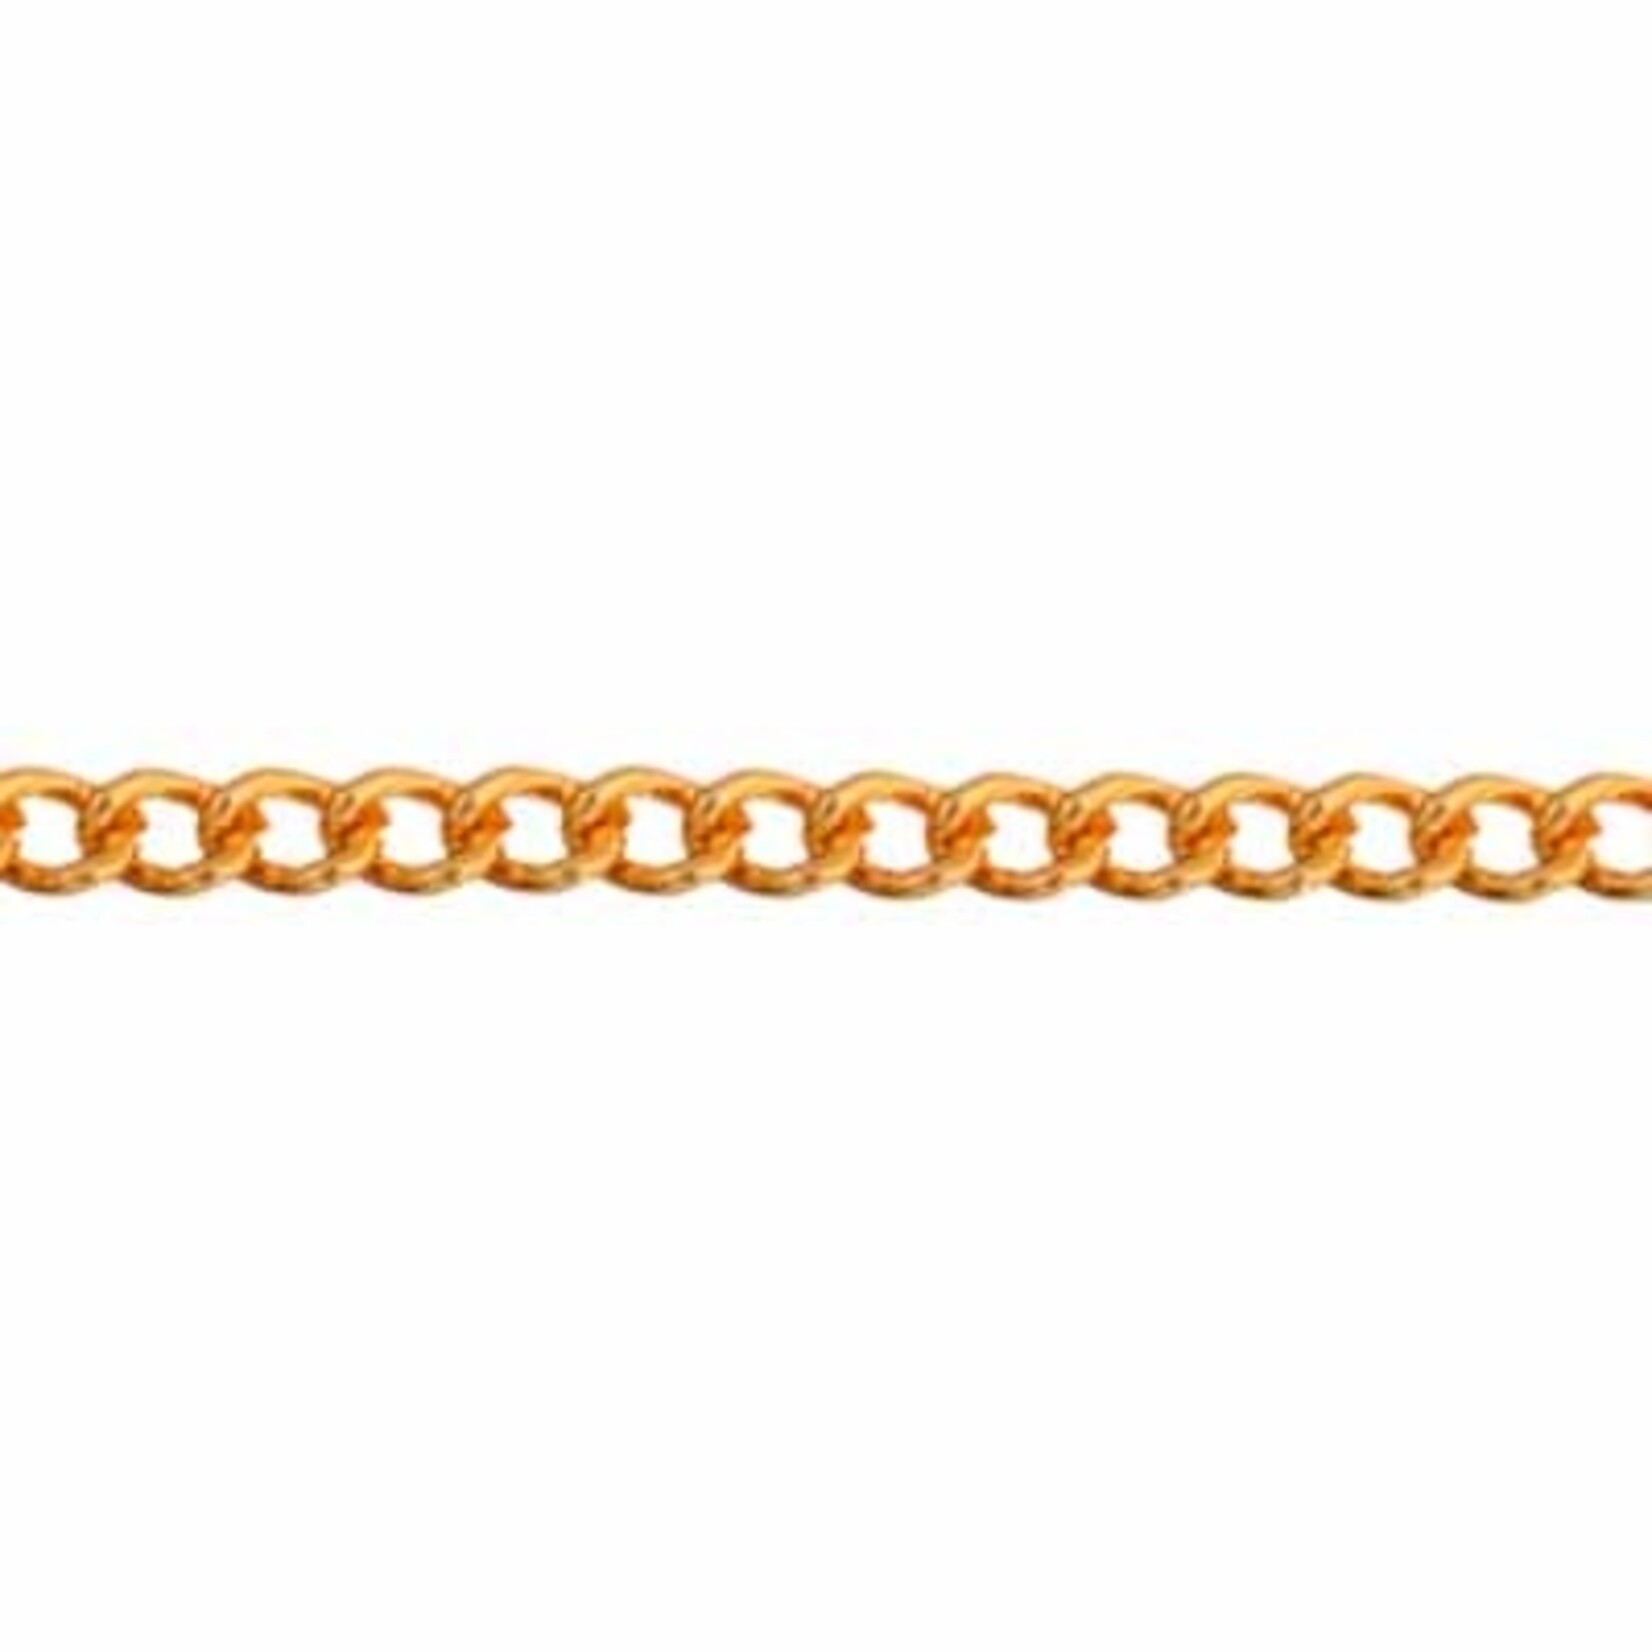 Chain Link Aluminum Gold 3mm (yard)